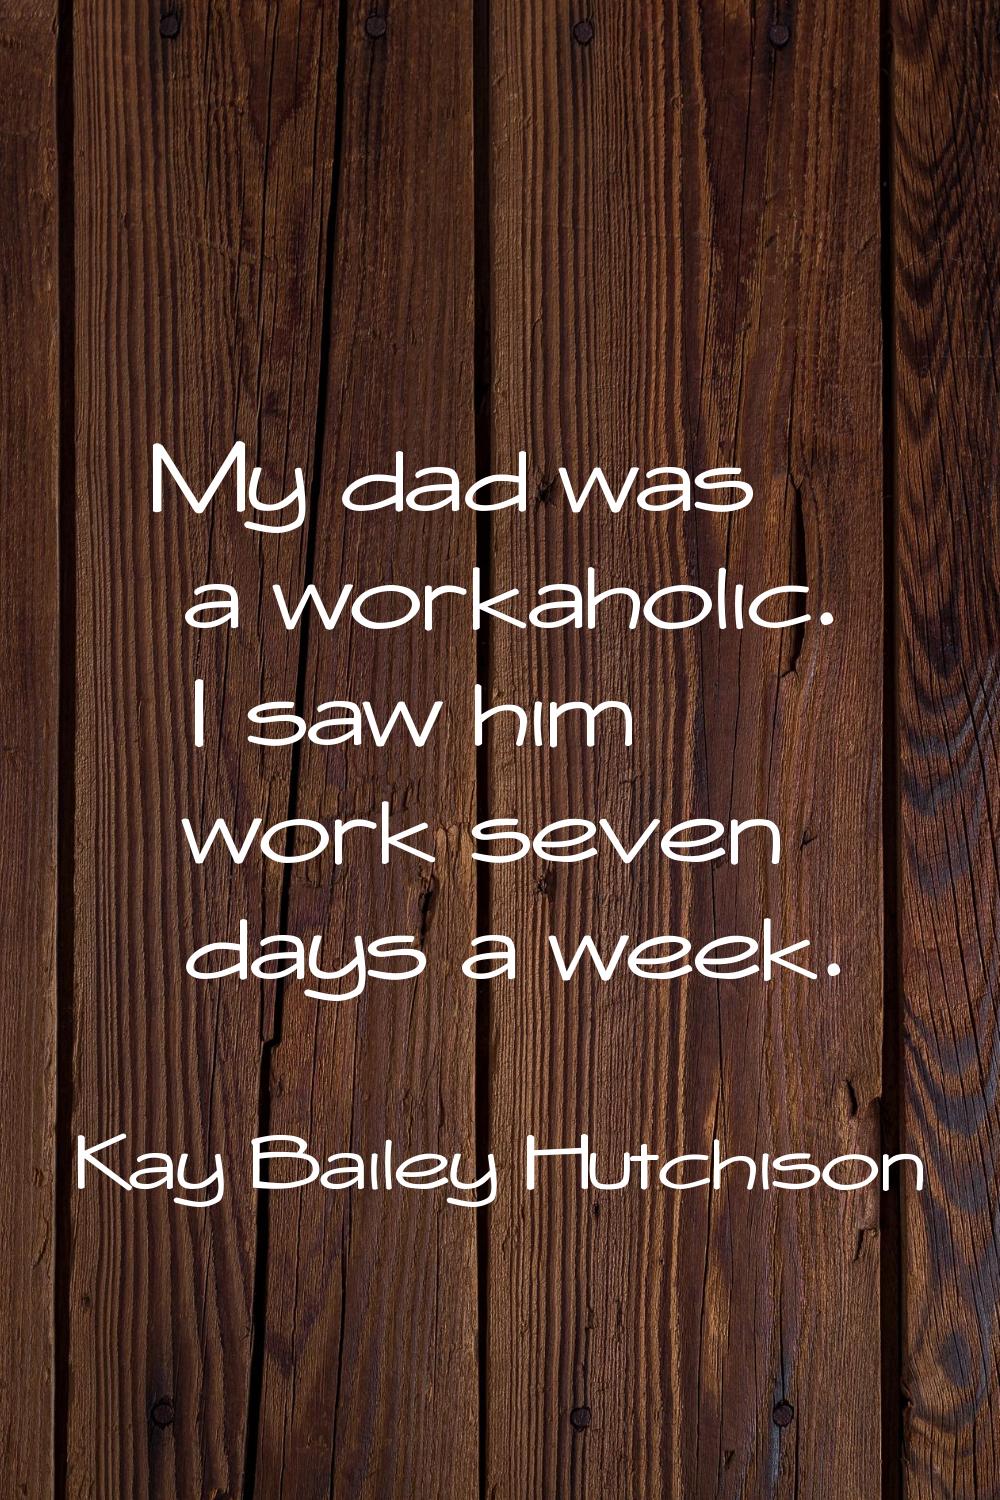 My dad was a workaholic. I saw him work seven days a week.